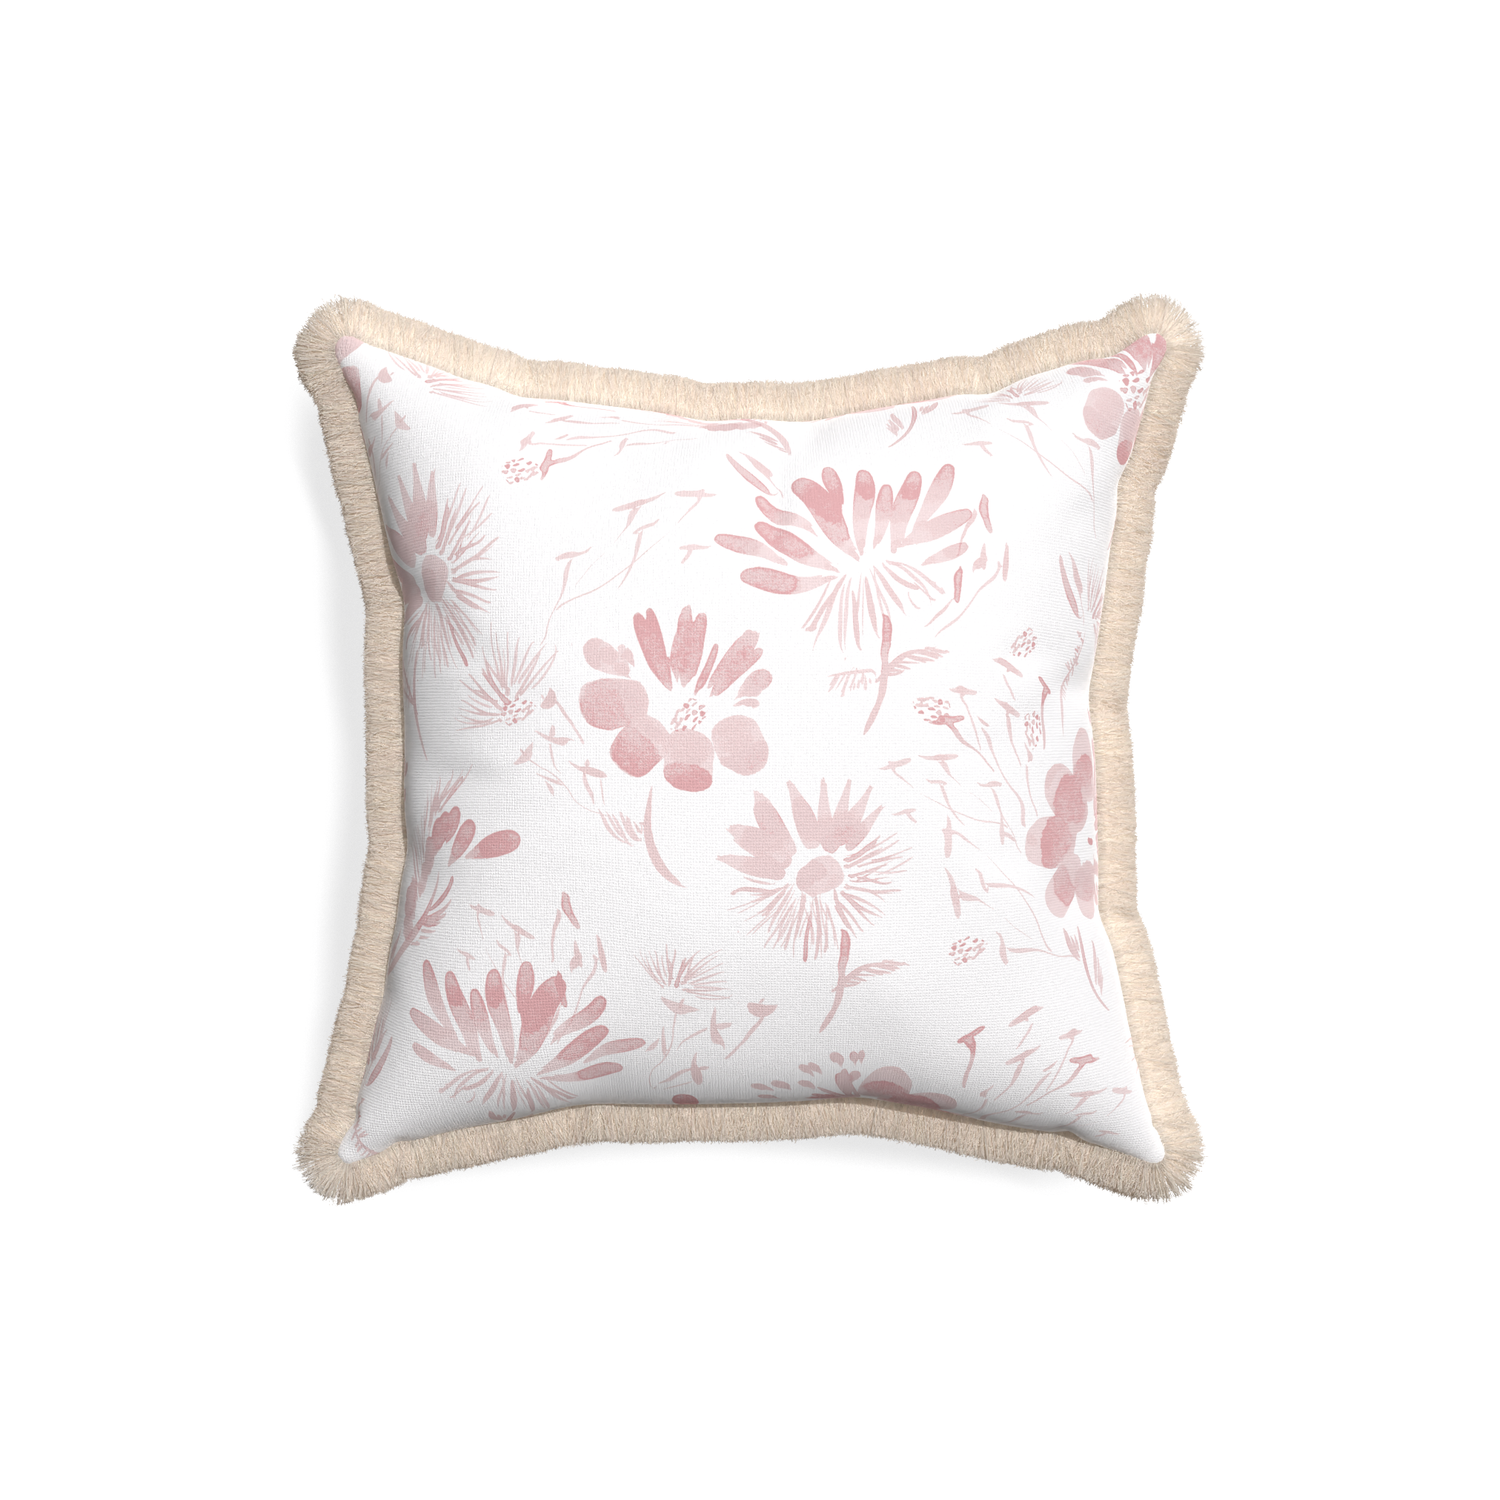 18-square blake custom pillow with cream fringe on white background